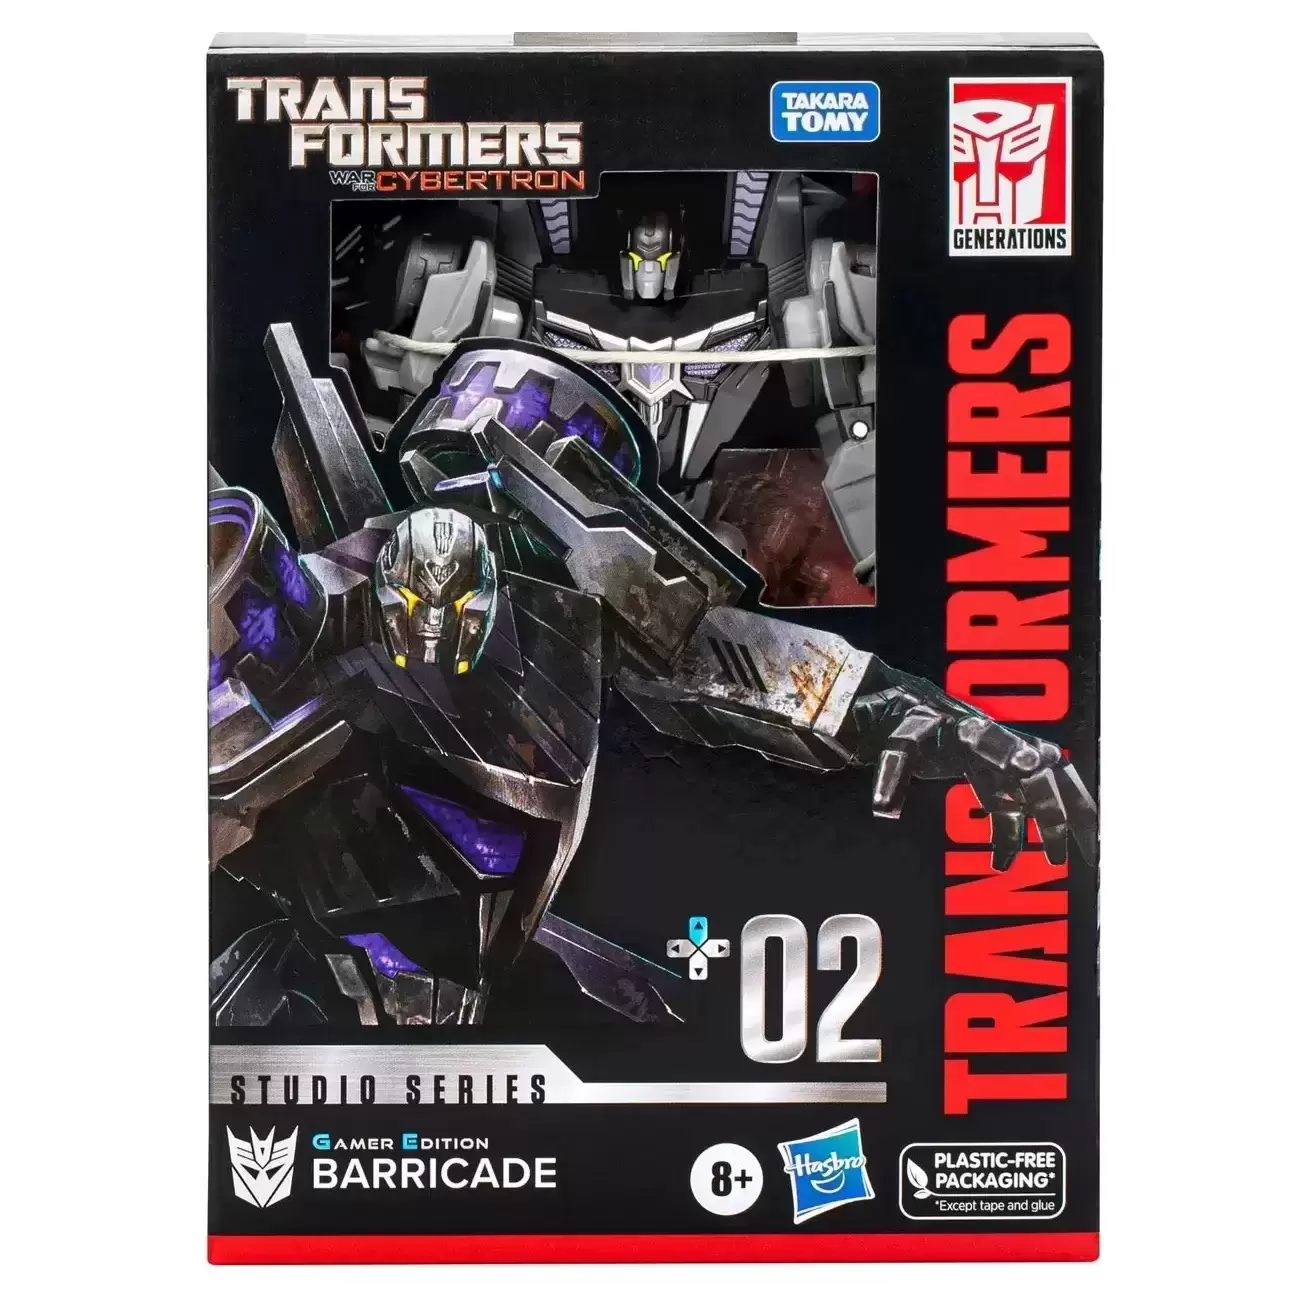 Transformers Studio Series - Barricade (Gamer Edition)